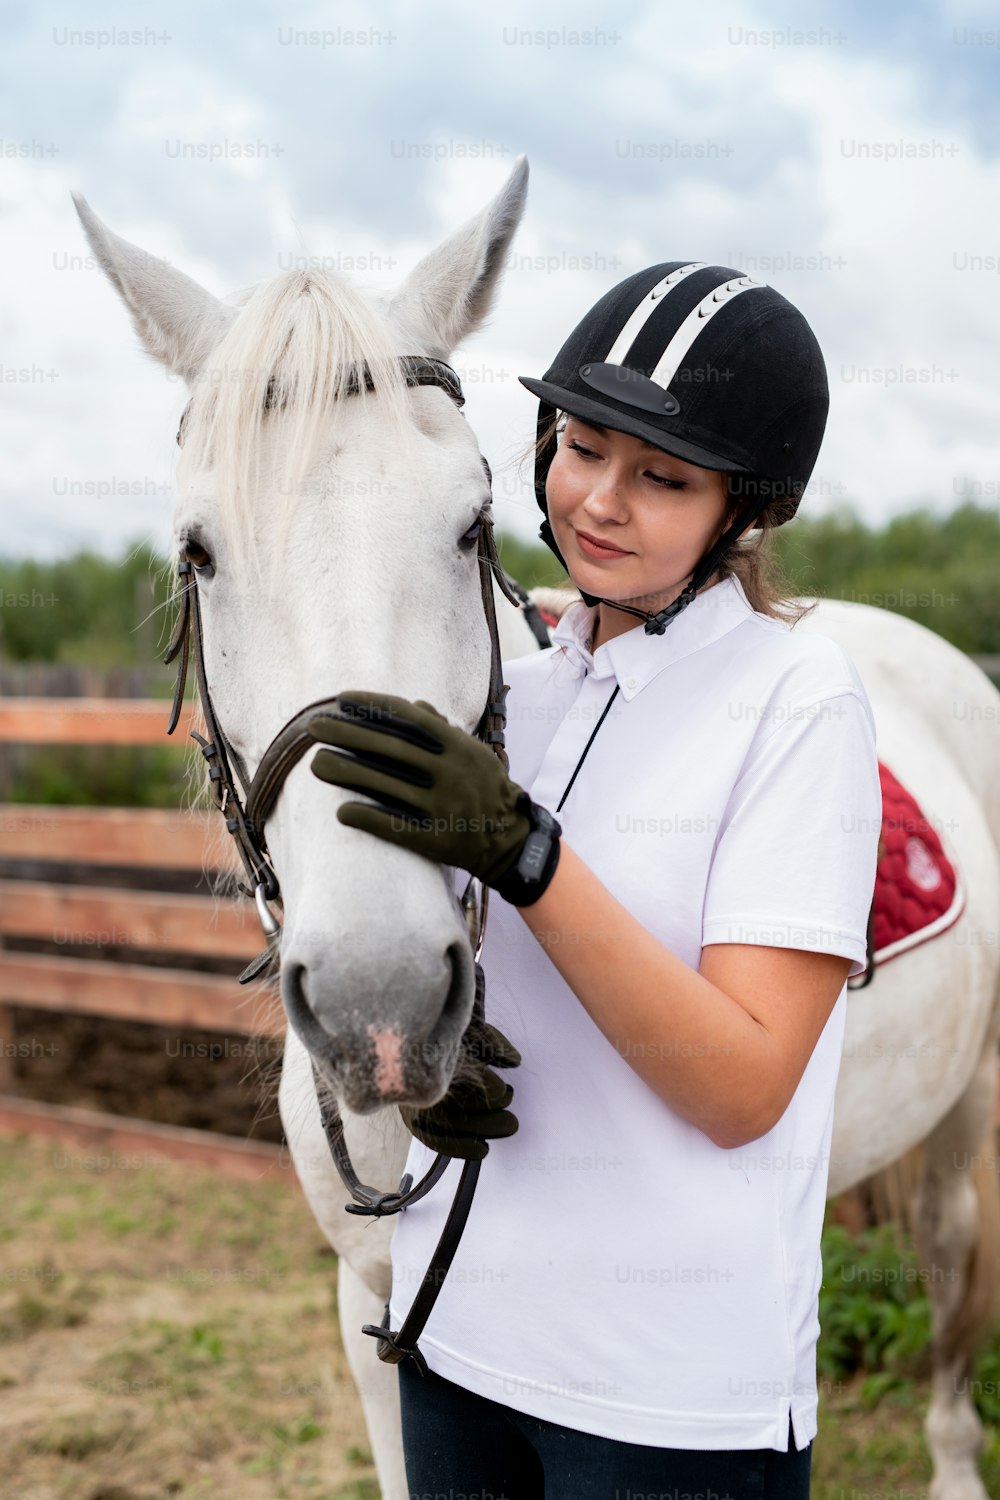 Hocico de abrazo hembra joven activa de caballo de carreras o yegua blanca de raza pura durante el frío en un entorno rural